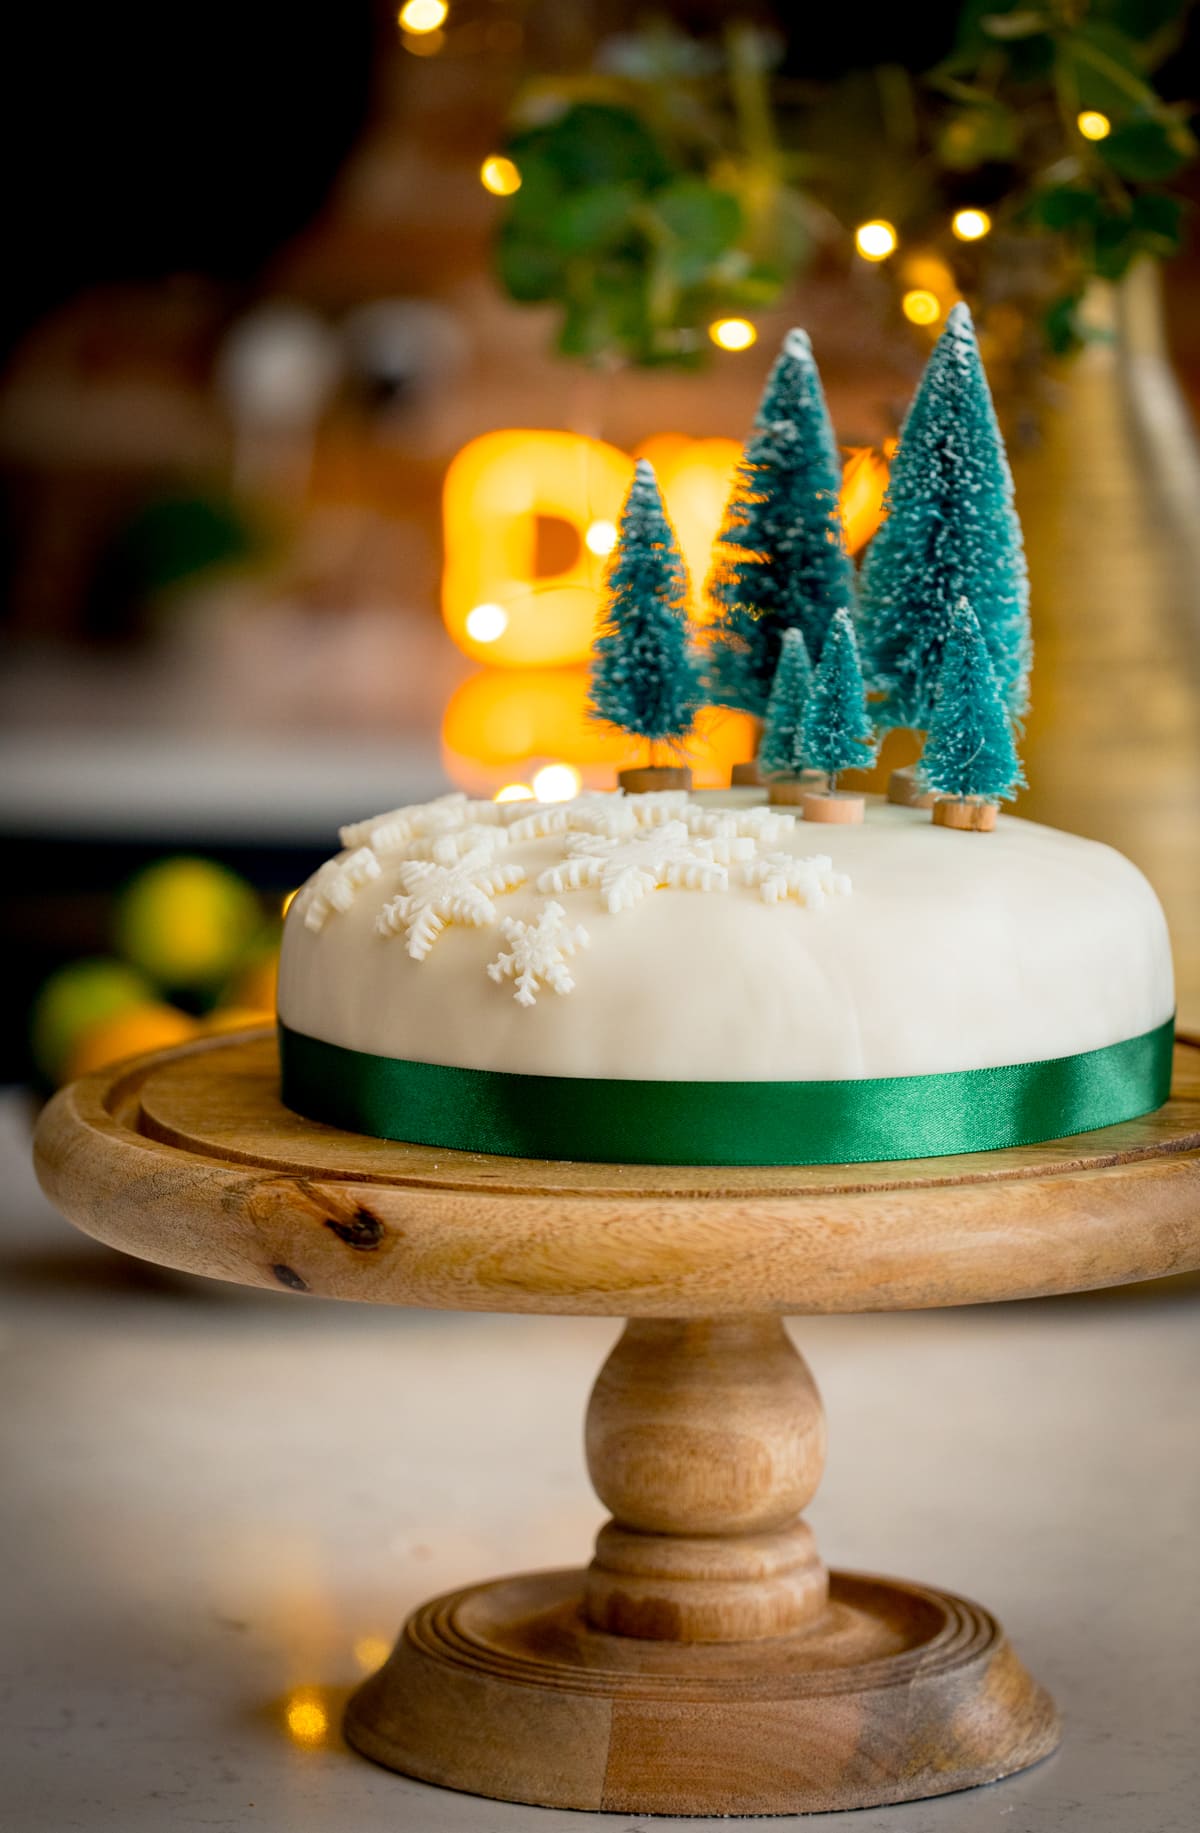 Best Christmas Tree Sheet Cake Recipe - How To Make Christmas Tree